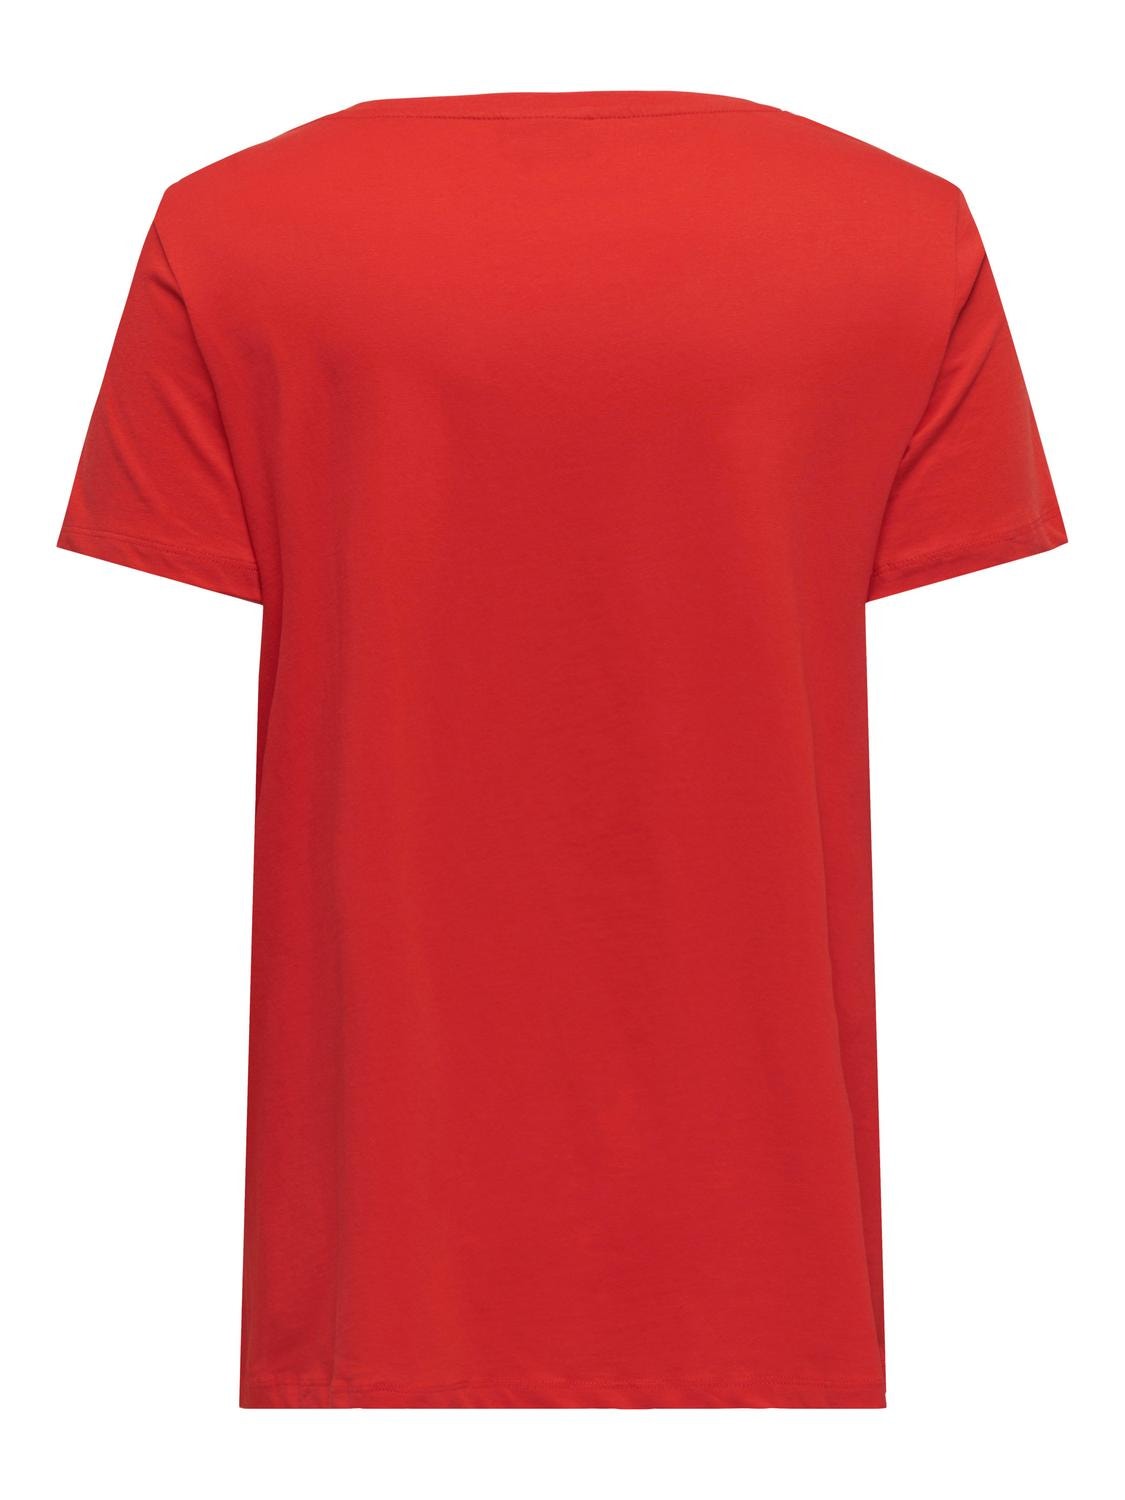 ONLY Curvy V-neck t-shirt -Flame Scarlet - 15298452